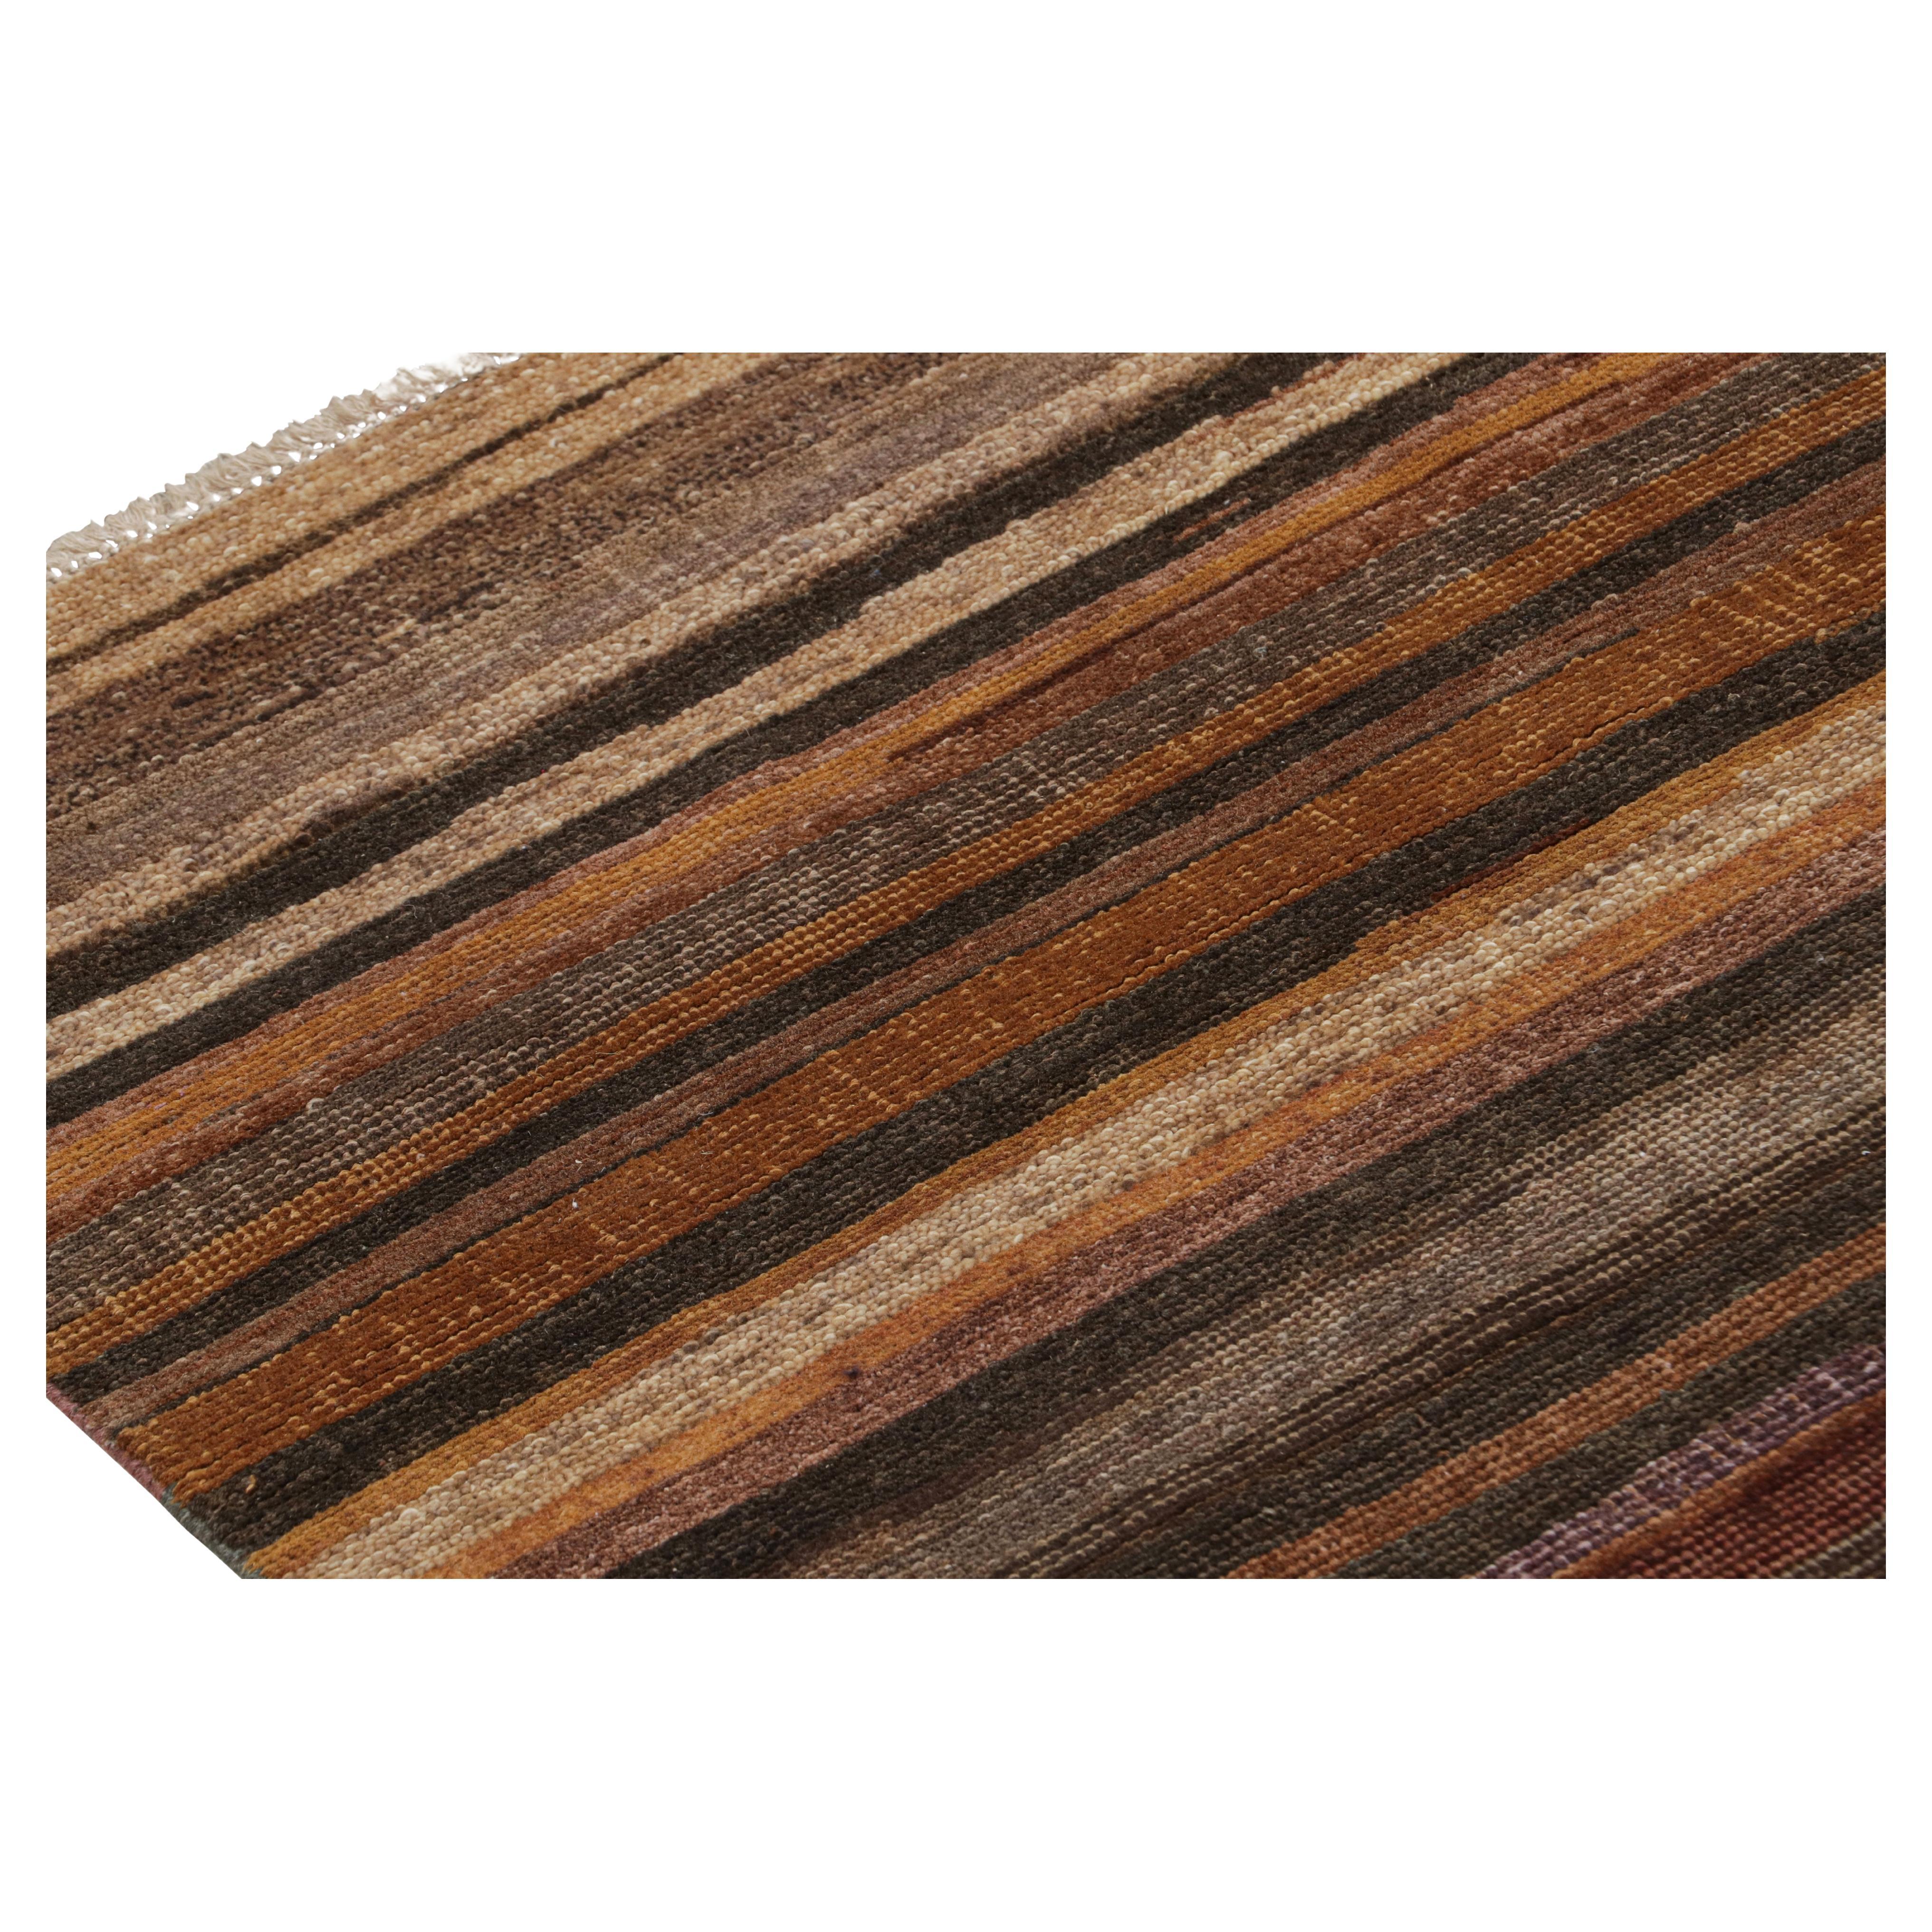 Rug & Kilim's Textural Rug in Beige-Brown Stripes and Striae (tapis texturé à rayures beige et marron) en vente